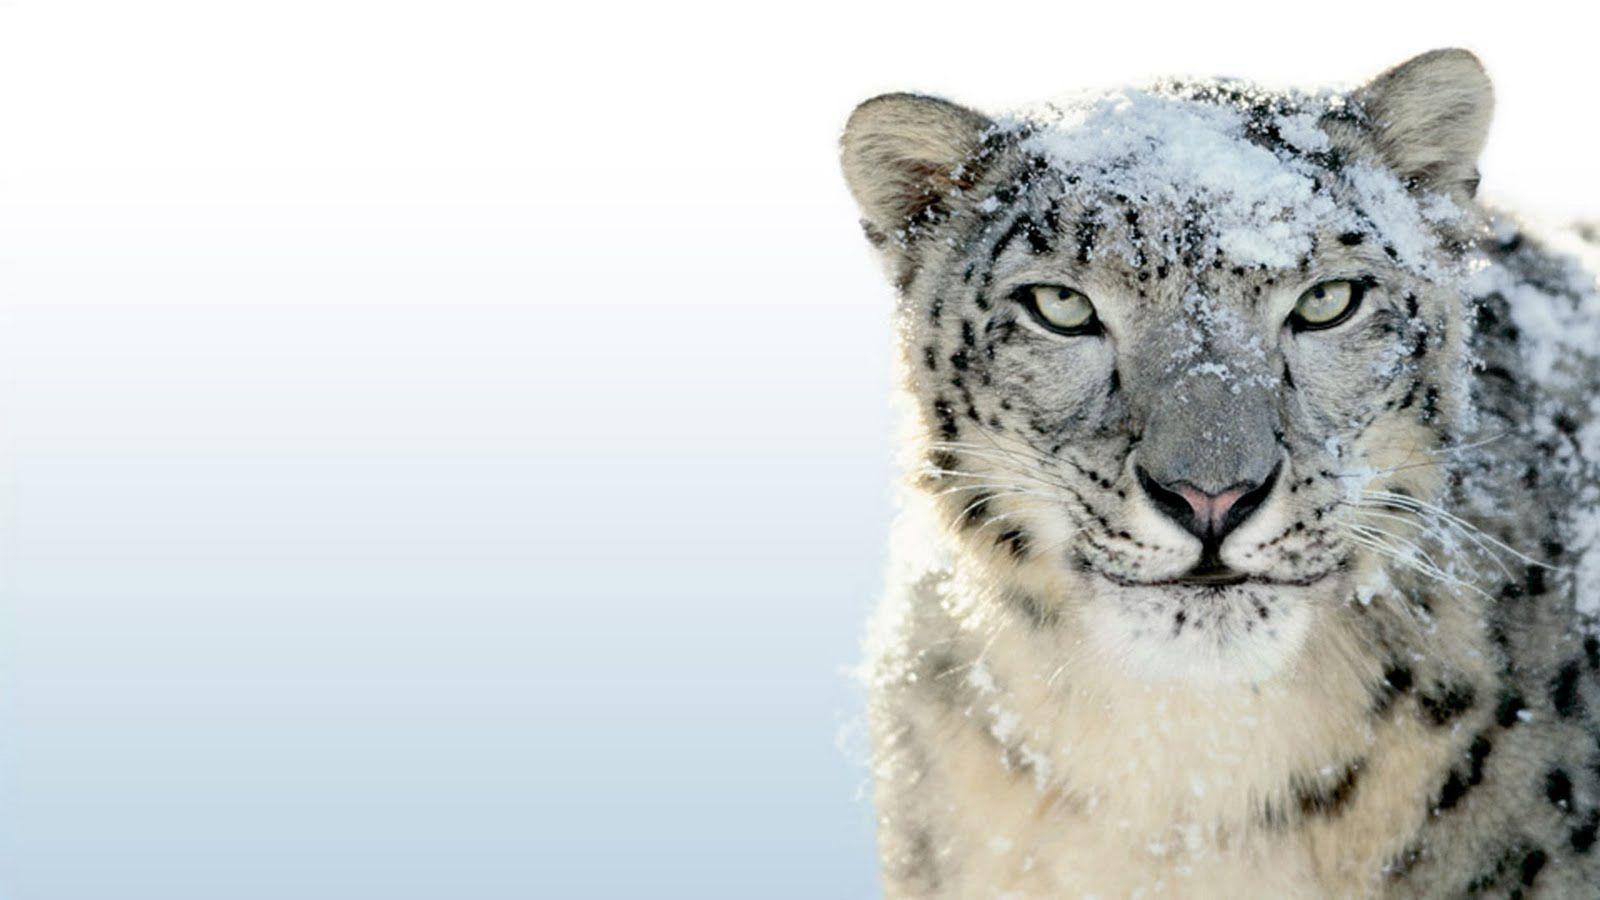 dreamcast emulator mac snow leopard free download